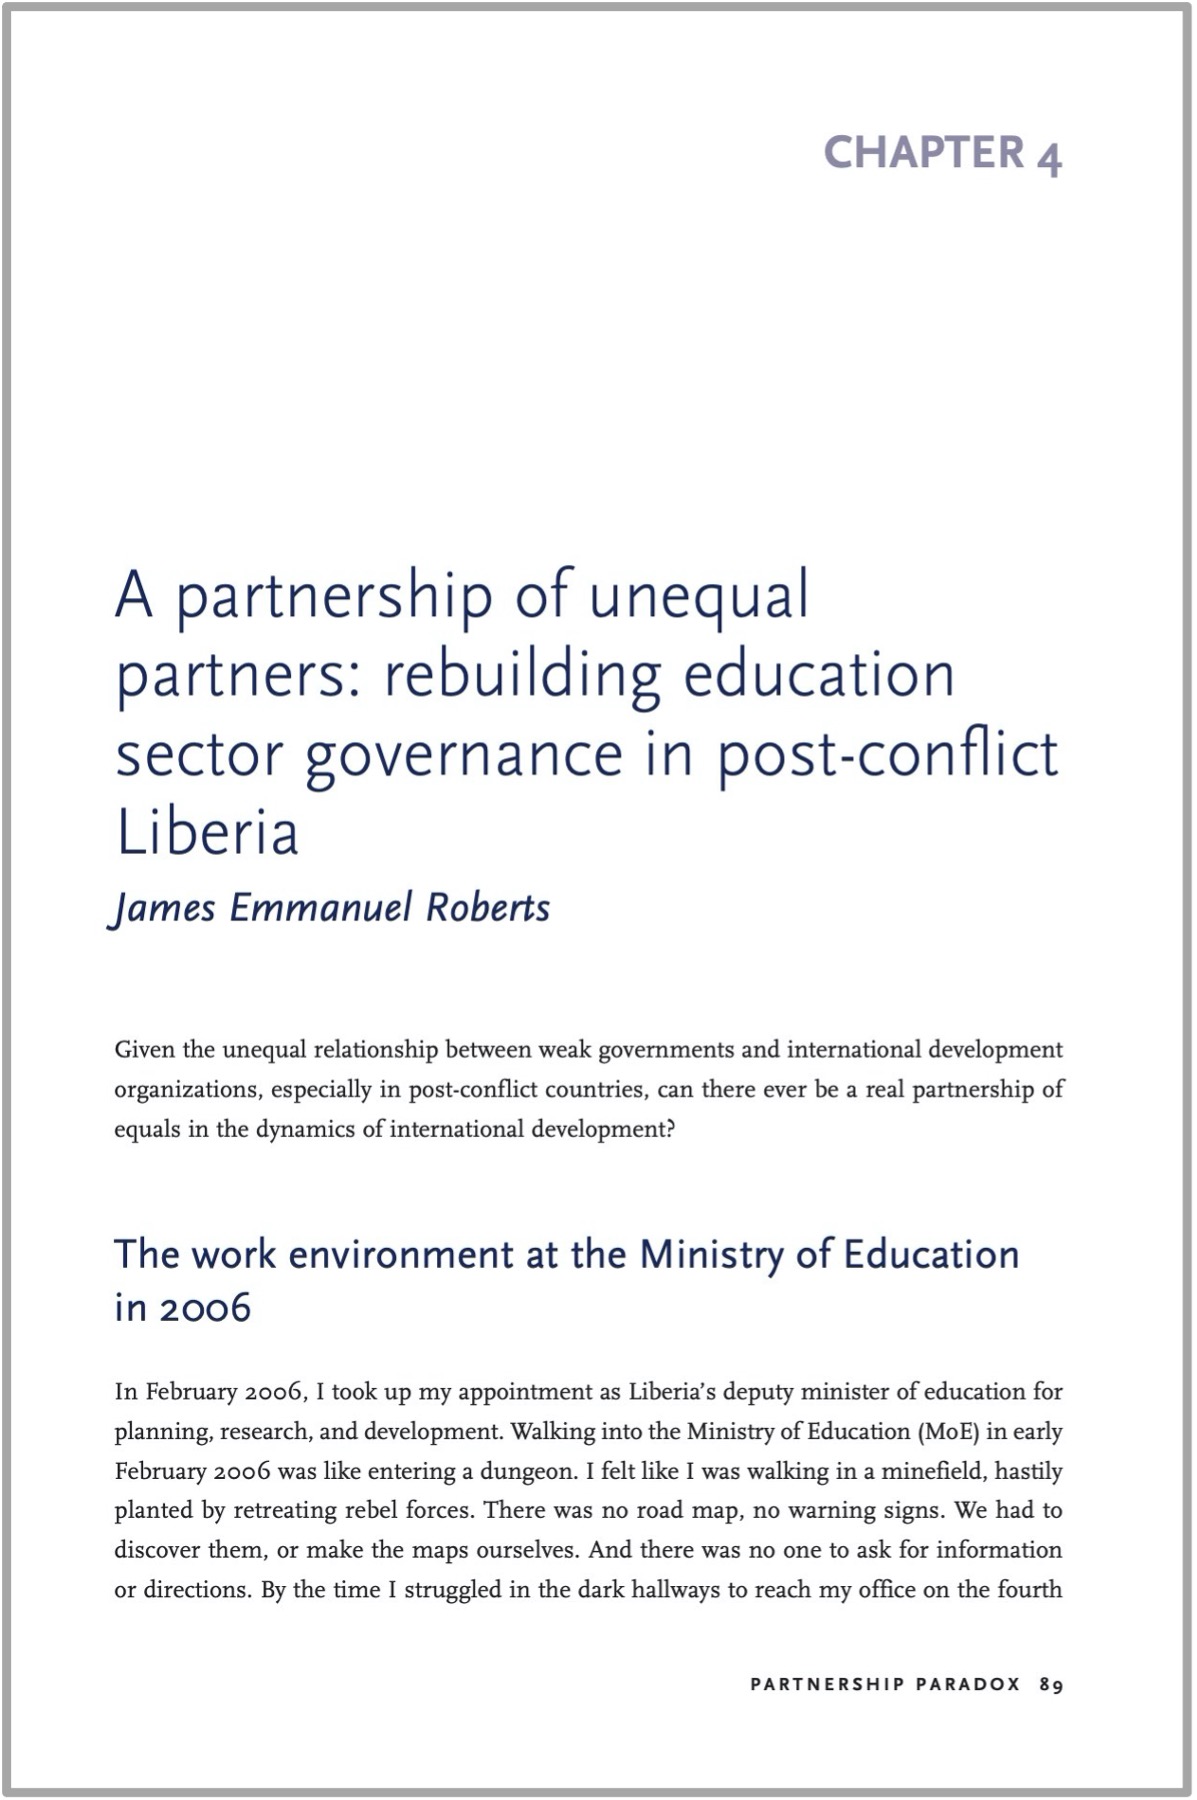 Kona Khasu, "A Partnership of Unequal Partners: Rebuilding Education Sector Governance in Post-Conflict Liberia"